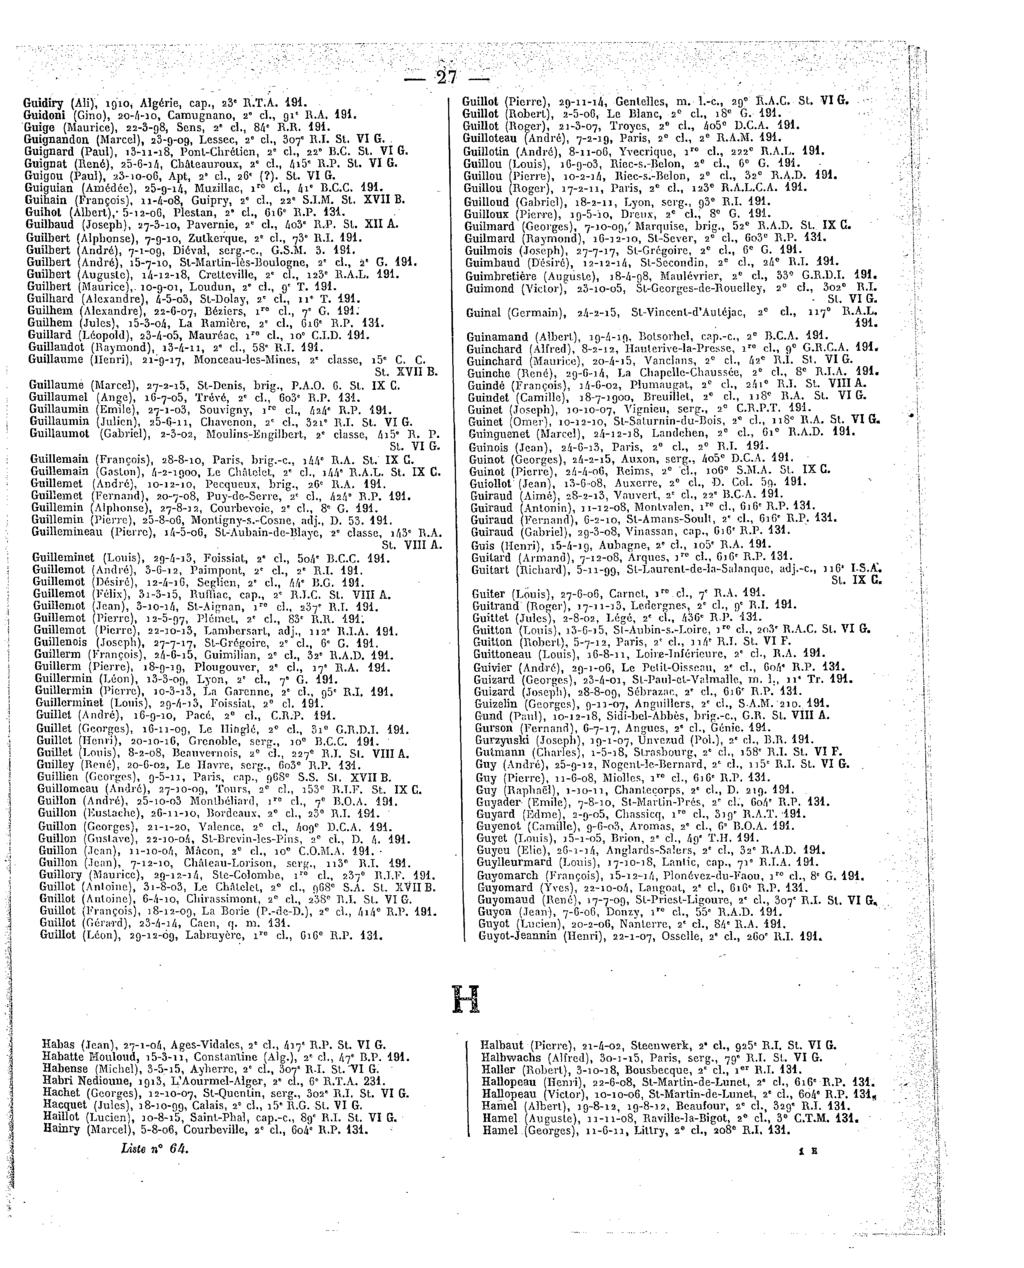 27 Guidiry(Ali),1910,Algérie, cap.,23'r.t.a. Guidoni (Gino), 20-4-10, Camugnano, 2 cl.,gi' R.A. Guige 22-3-g8, Sens,2' cl.,84'r.r. Guignandon. 23-9-09, Lessec,2 cl.,307"r.i. Guignard (Paul),i3-u-i8,Pont-Chrétien, 2' cl.